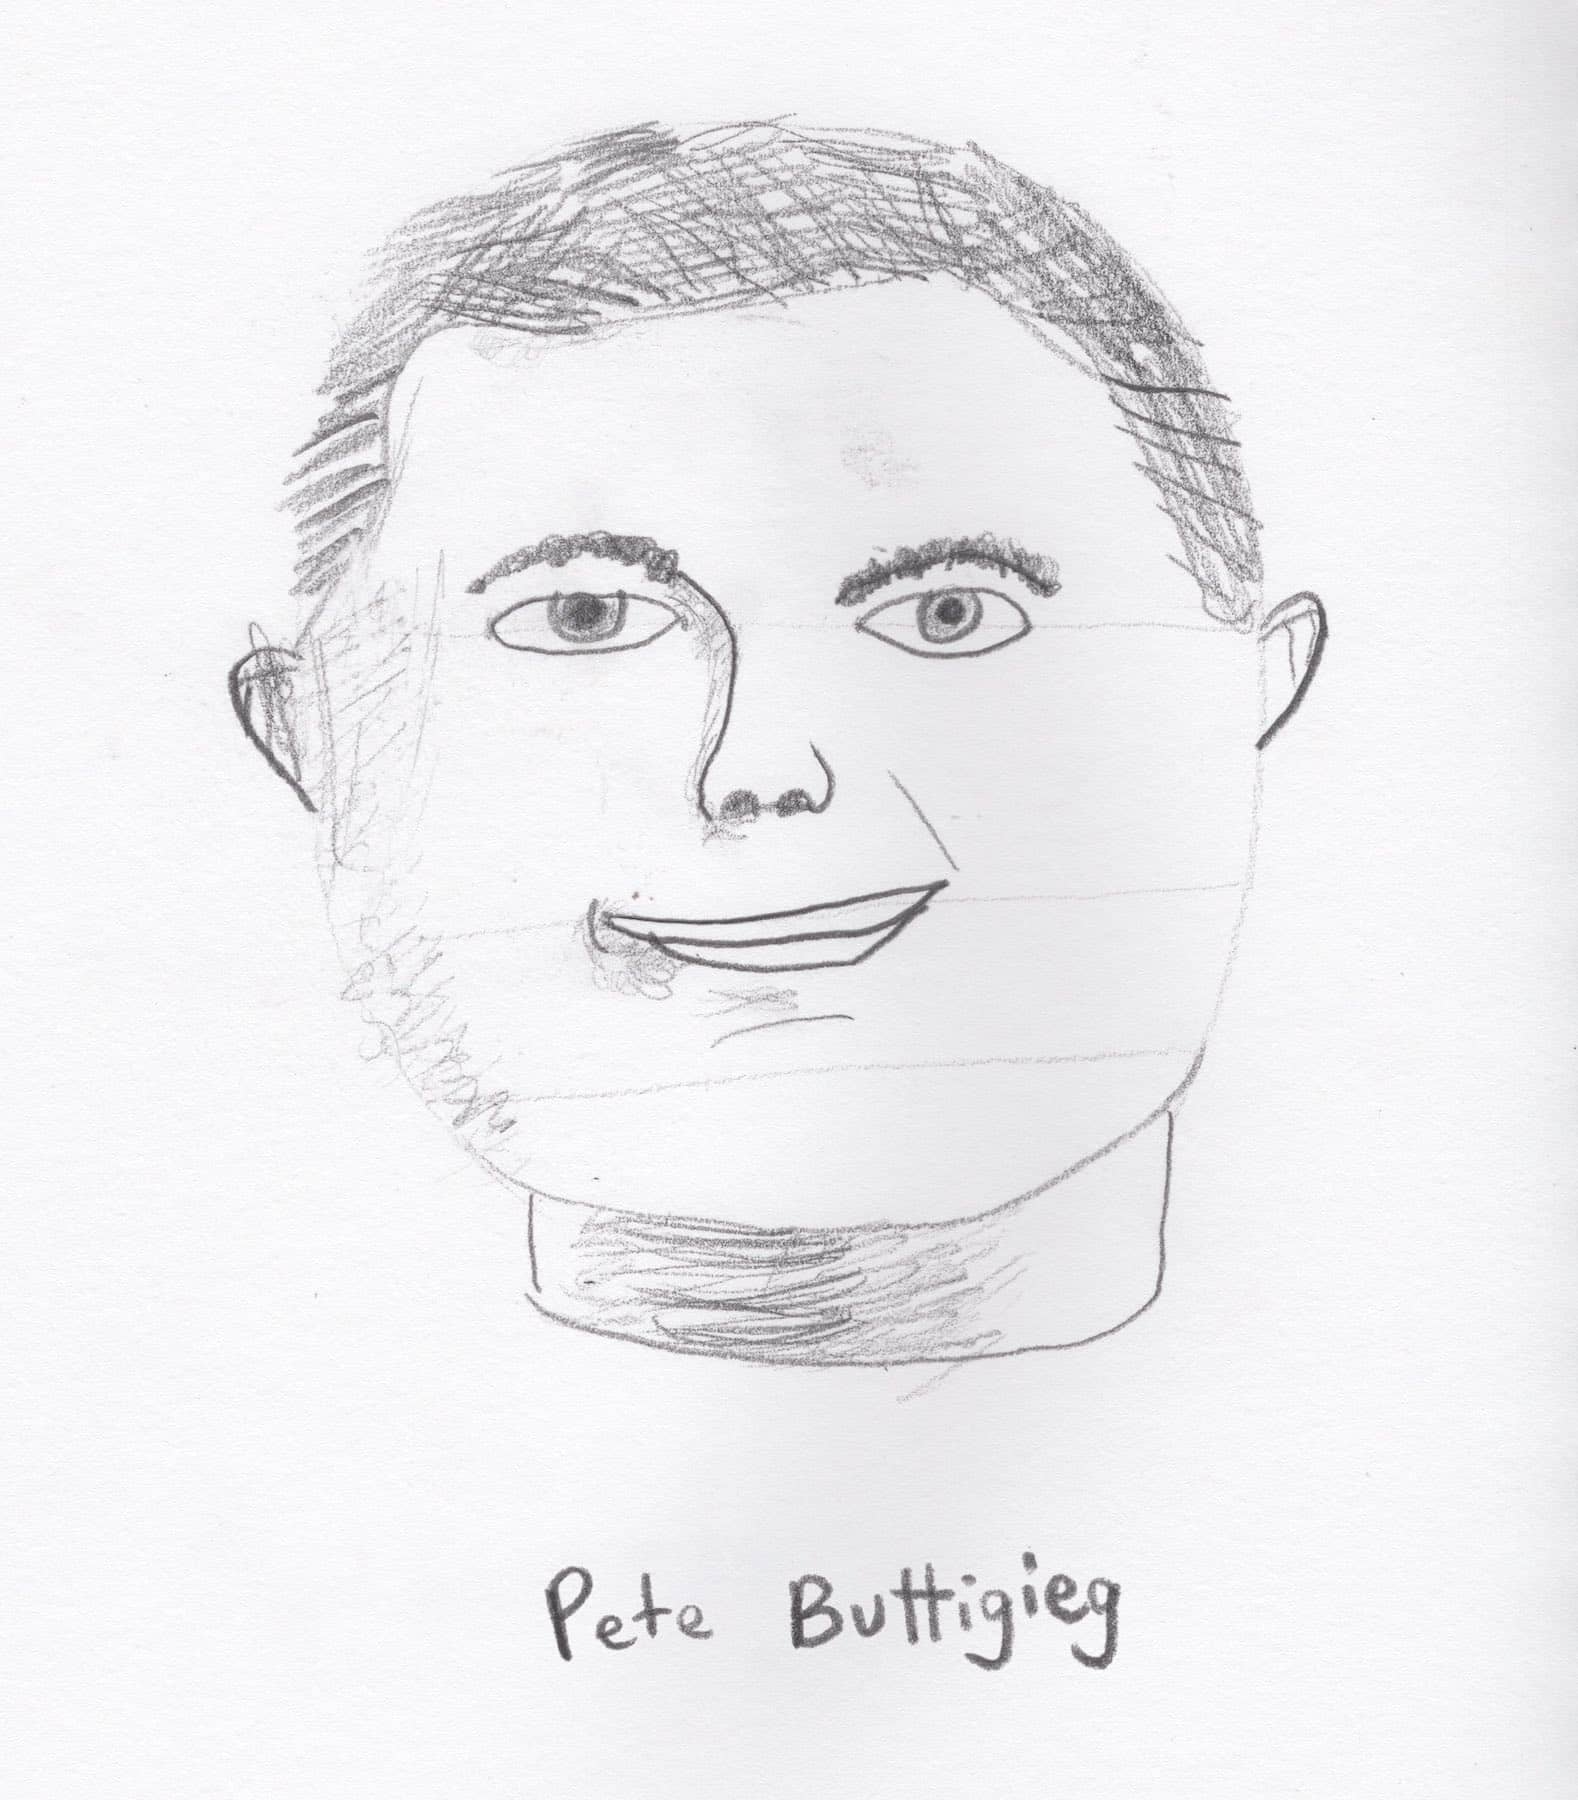 Artwork titled 'Pete Buttigieg' on 2021